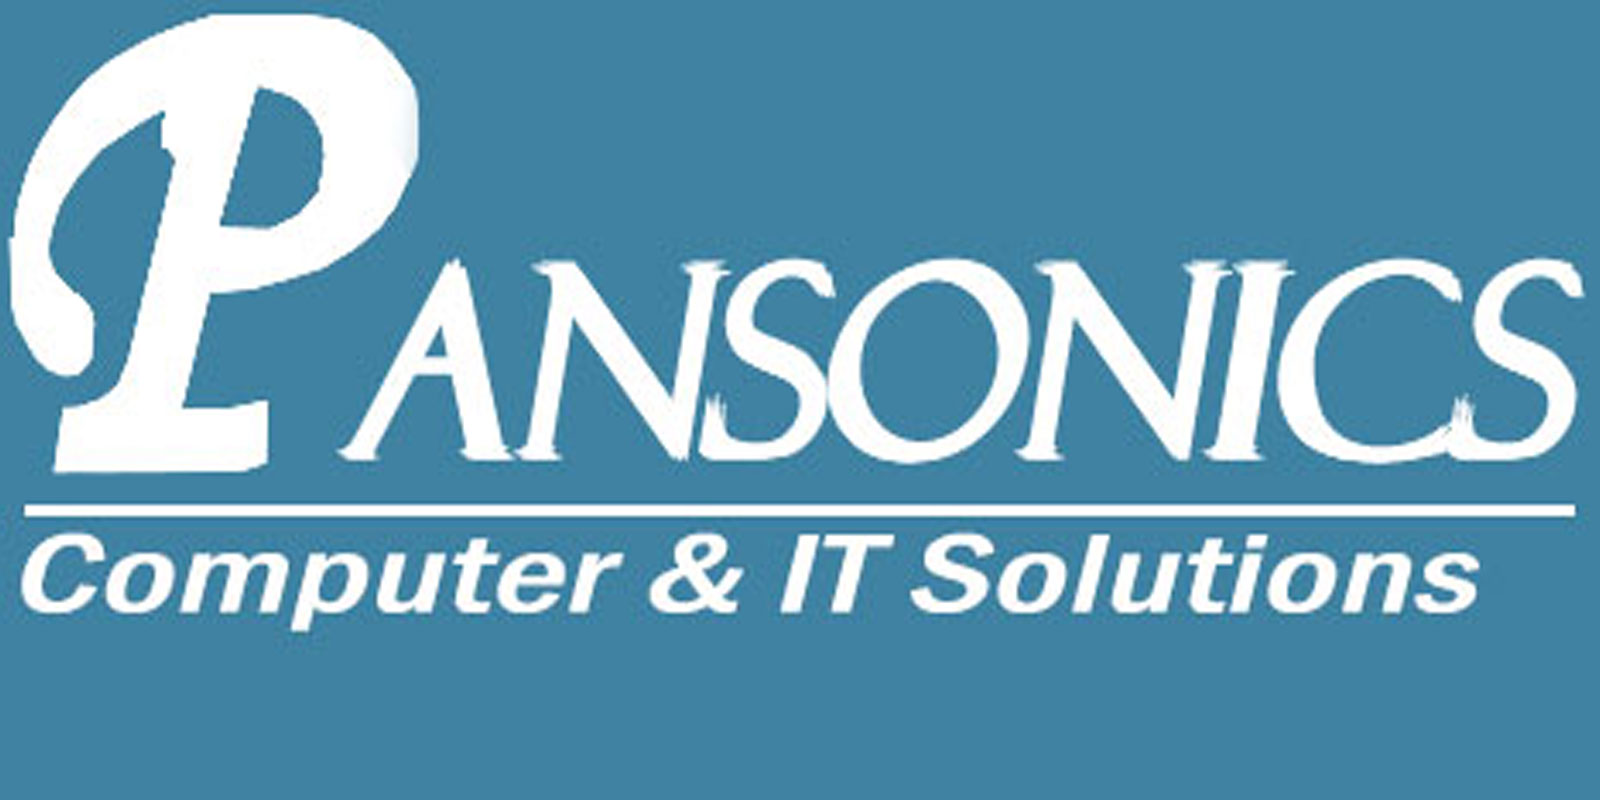 Pansonics Computer Co., Ltd.